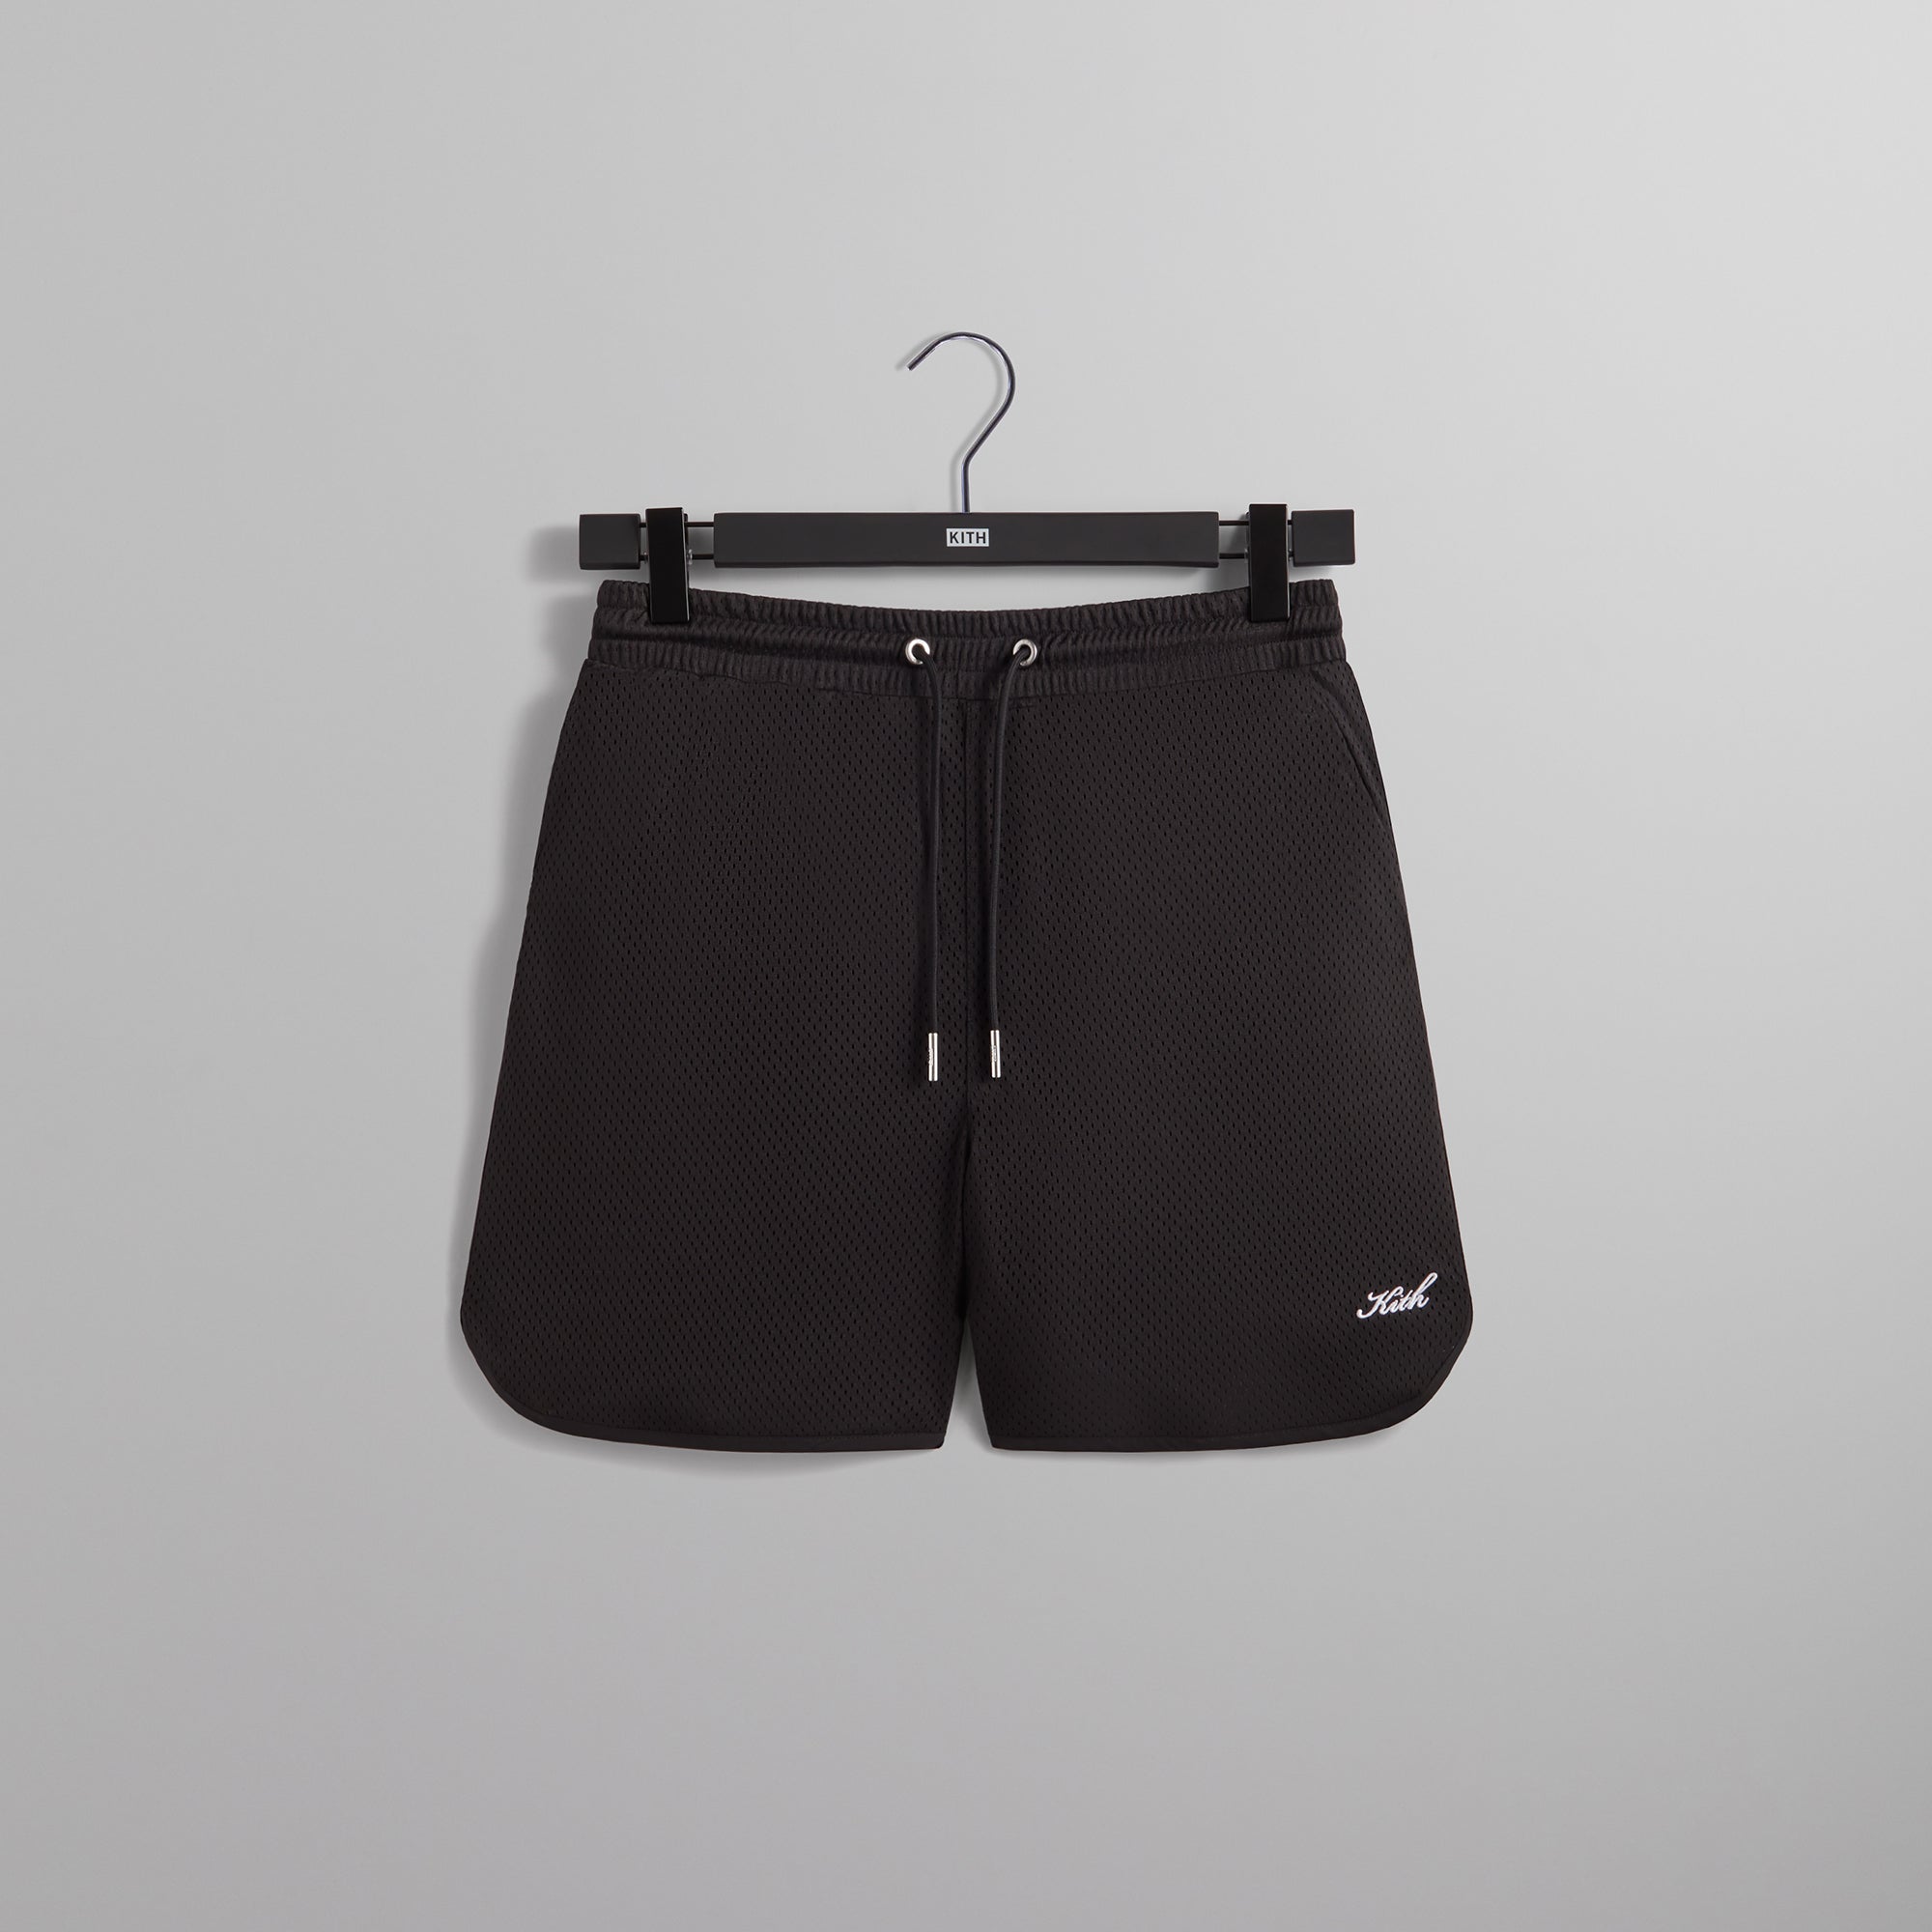 Buy Russell Athletic Men's Mesh Shorts (No Pockets), Grey/Silver, Medium at